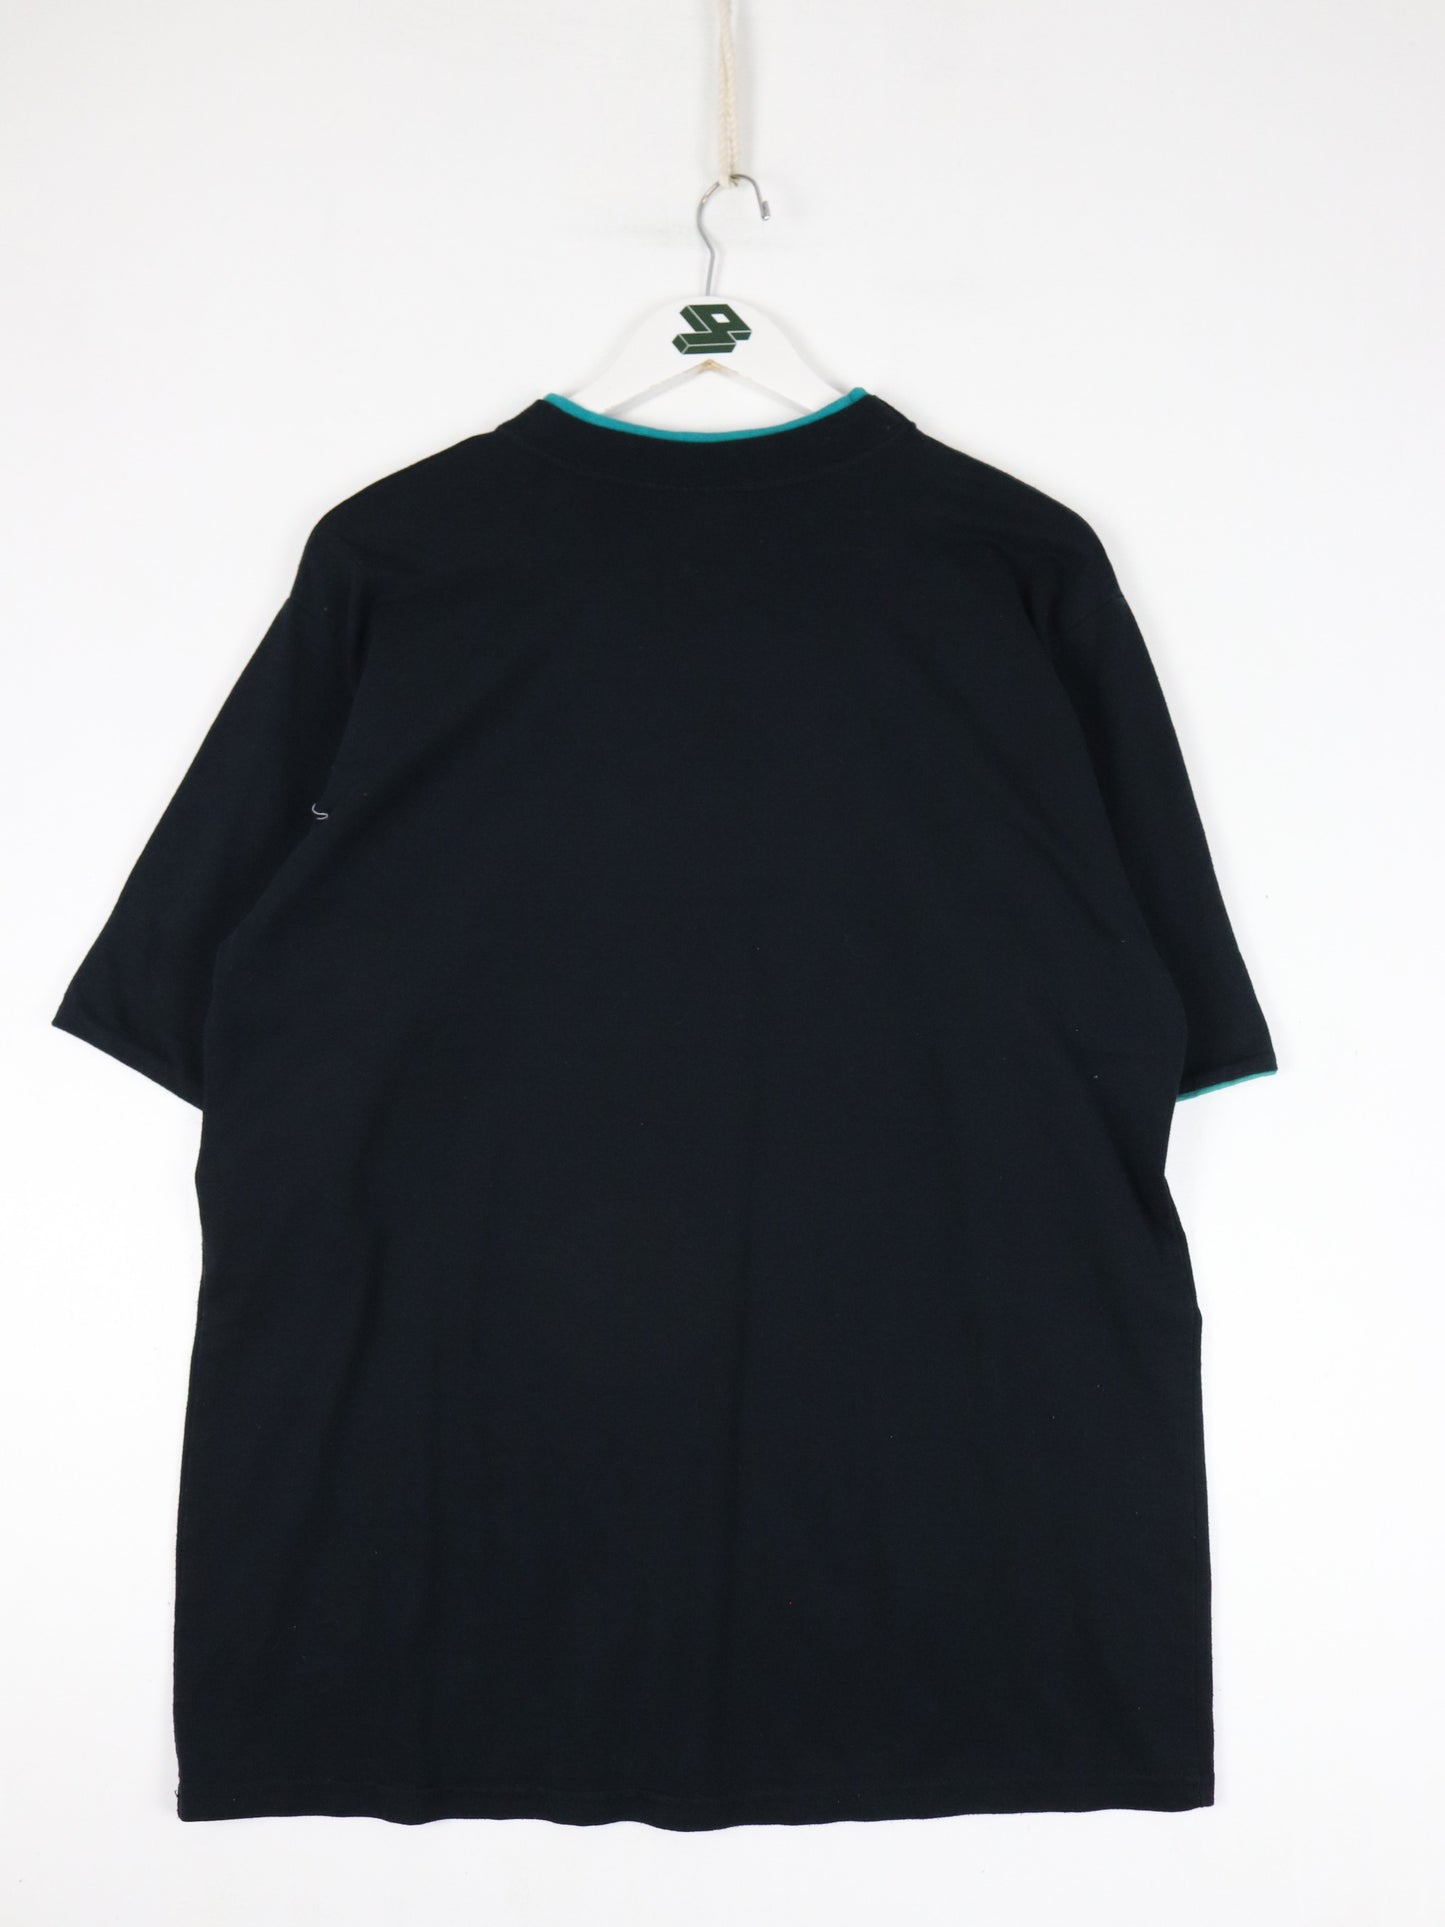 Vintage Florida T Shirt Mens XL Black 90s USA